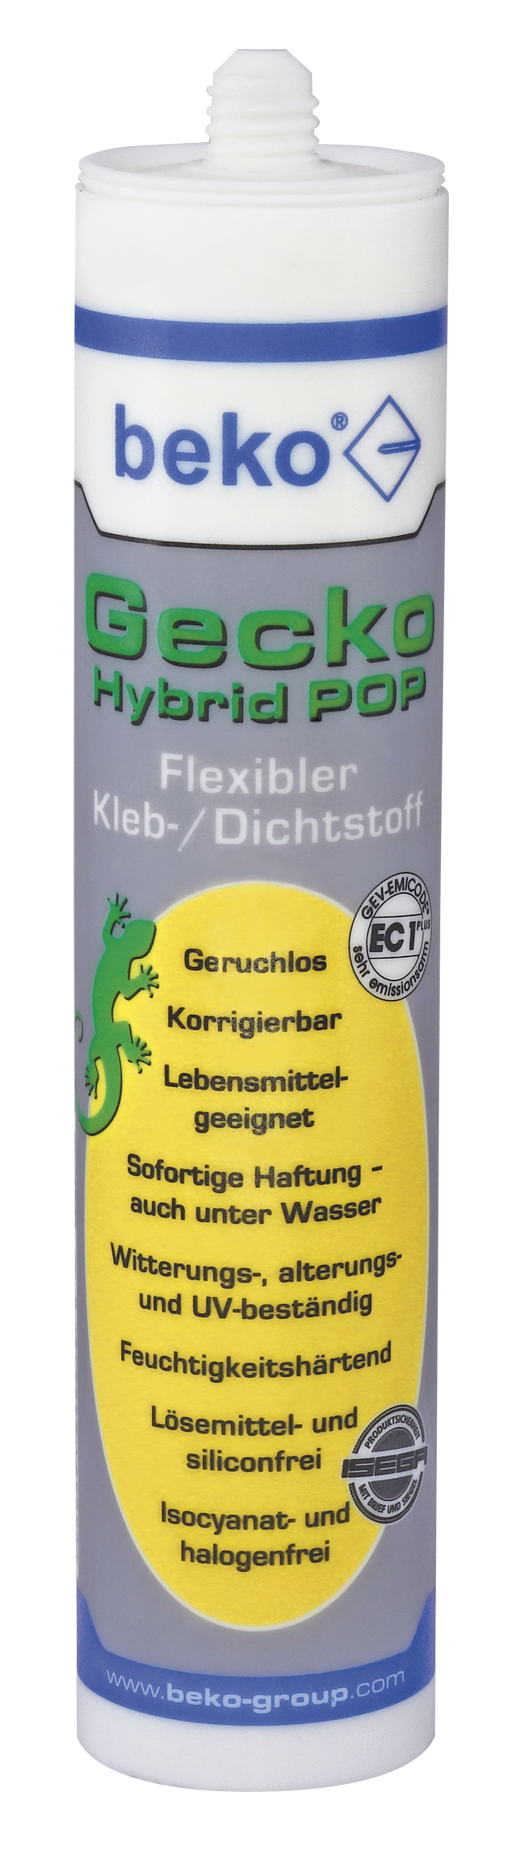 Gecko Hybrid POP Flexibler Kleb-/Dichtstoff 